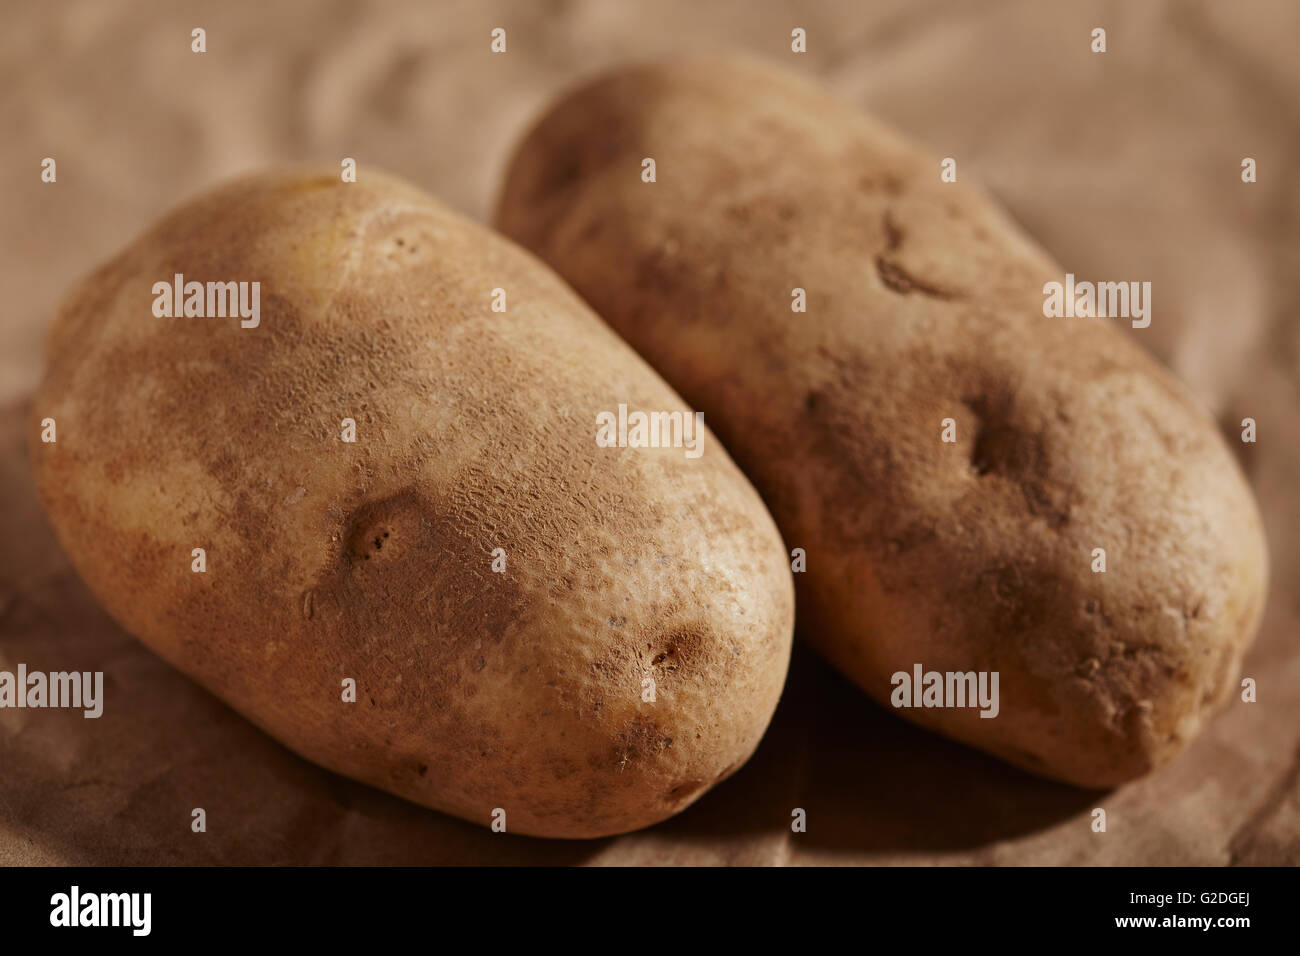 Two russet baking potatoes Stock Photo